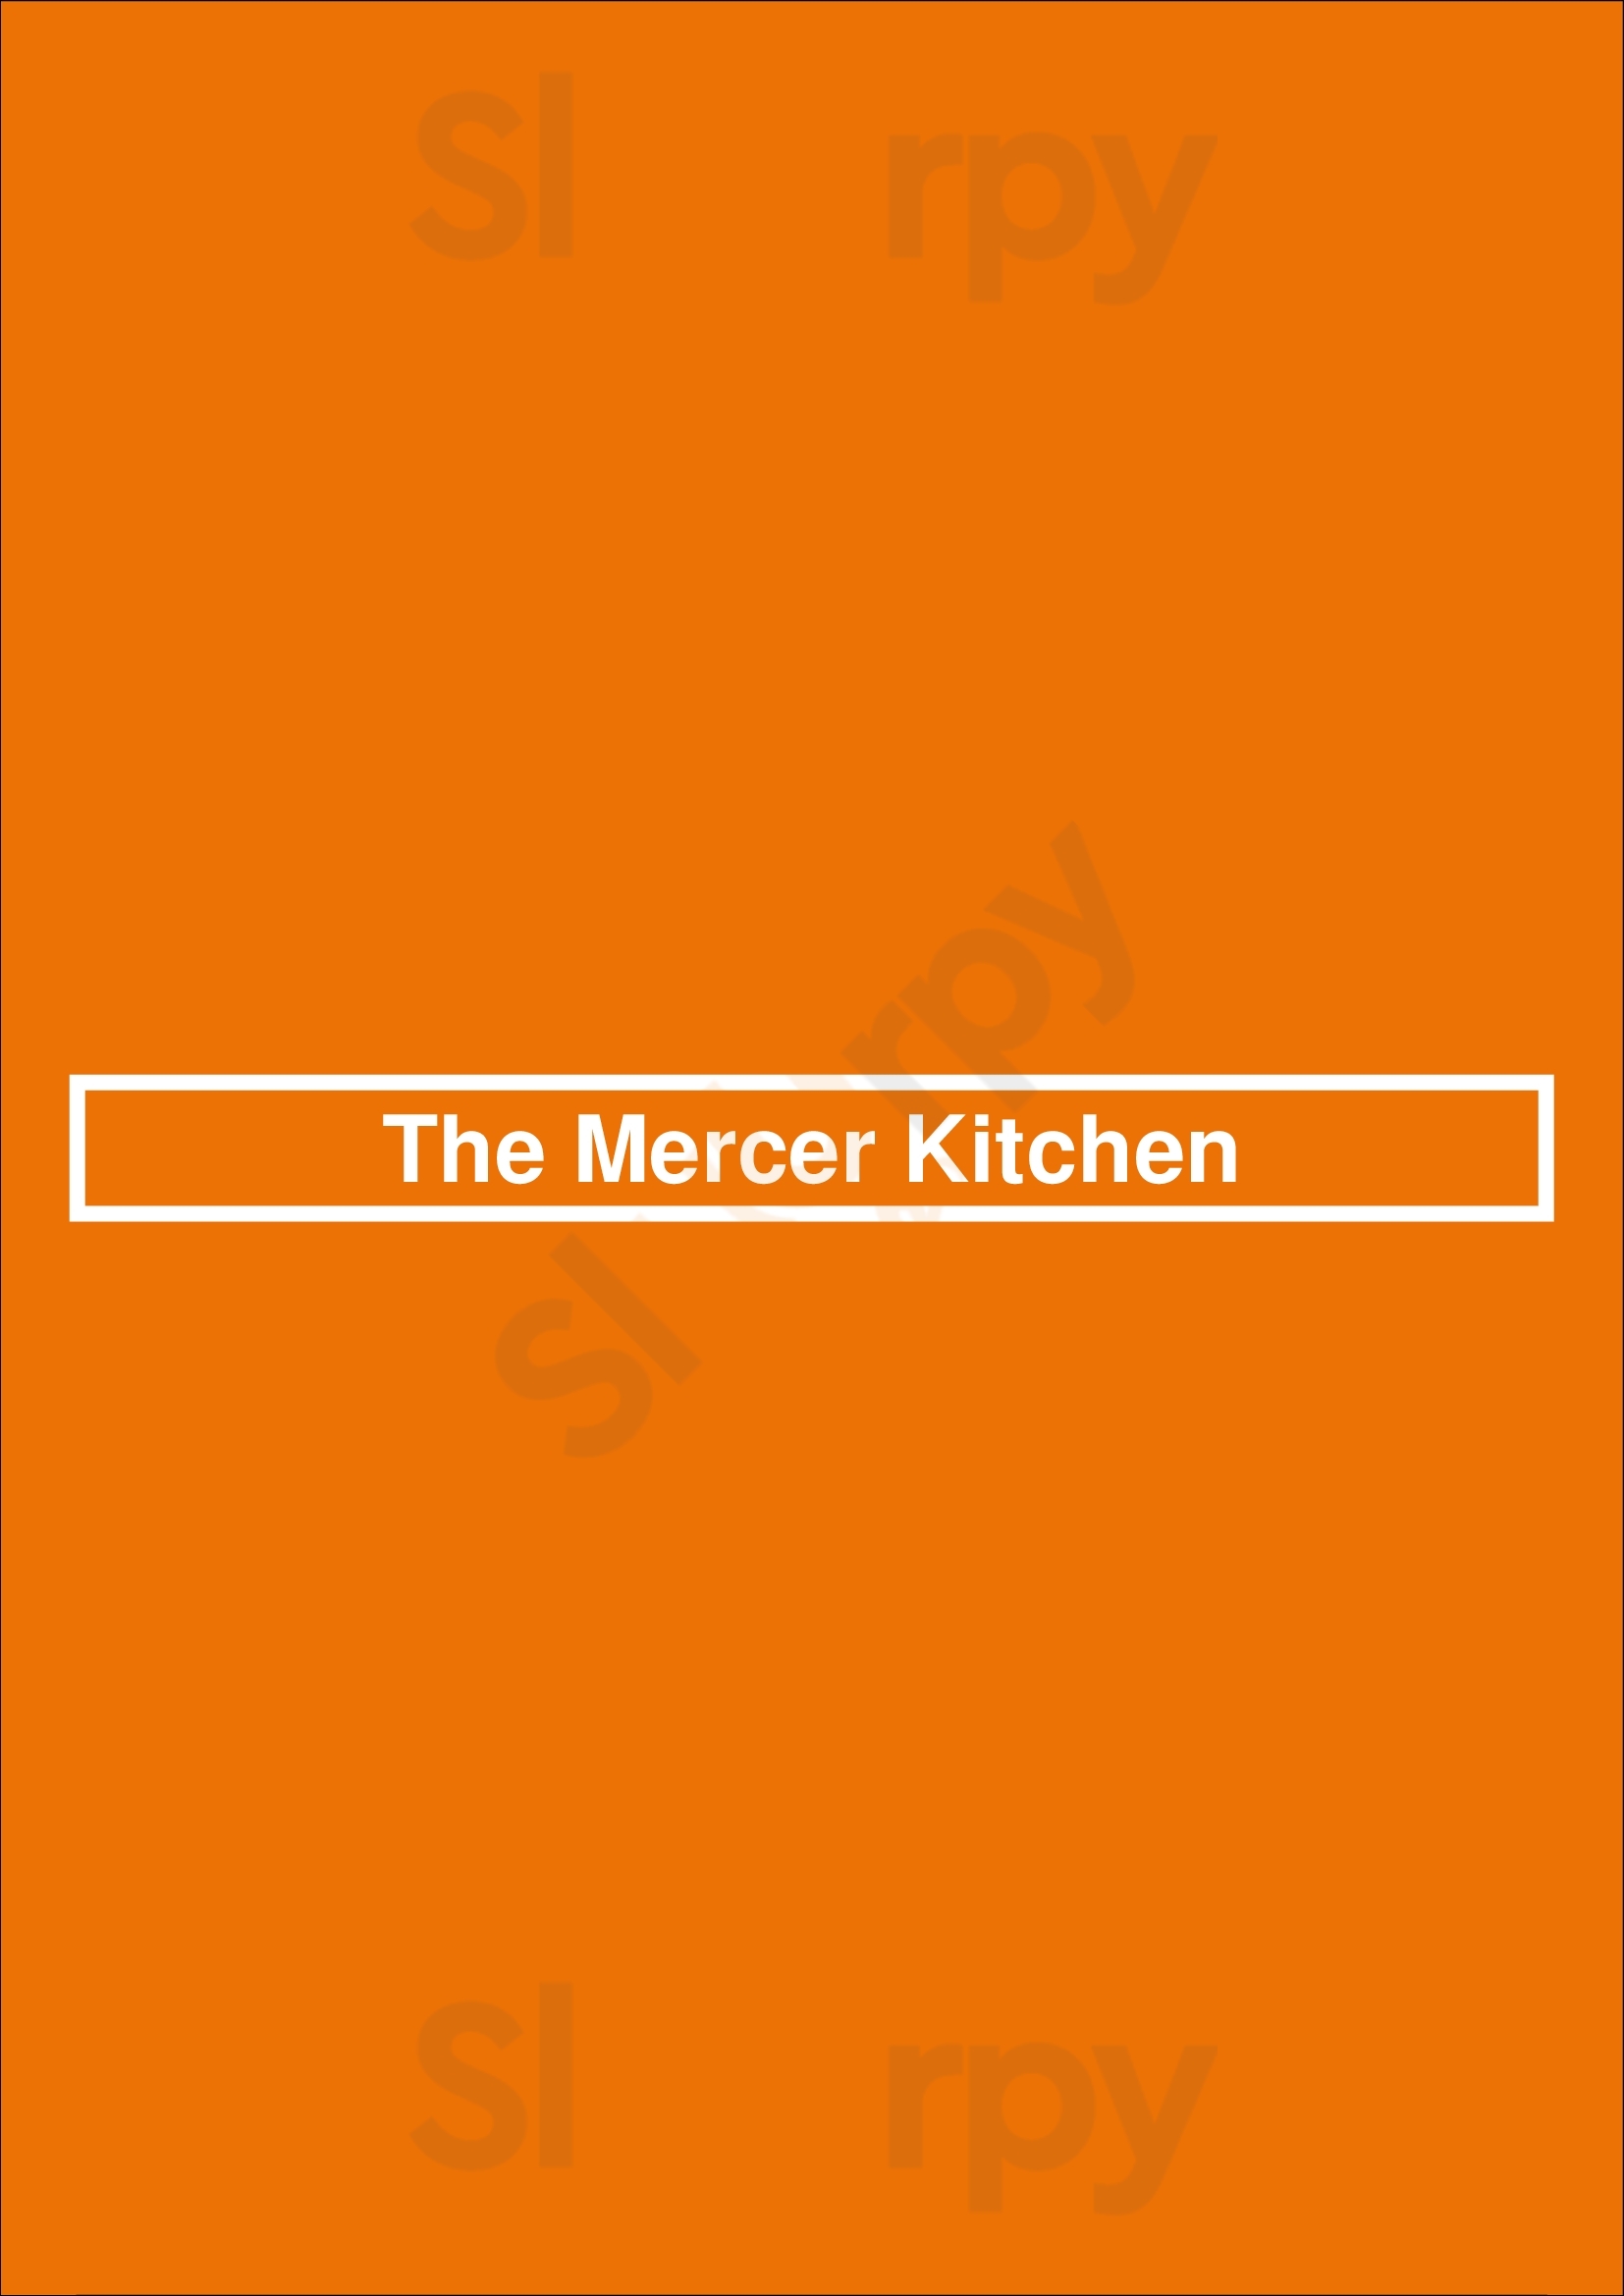 The Mercer Kitchen New York City Menu - 1